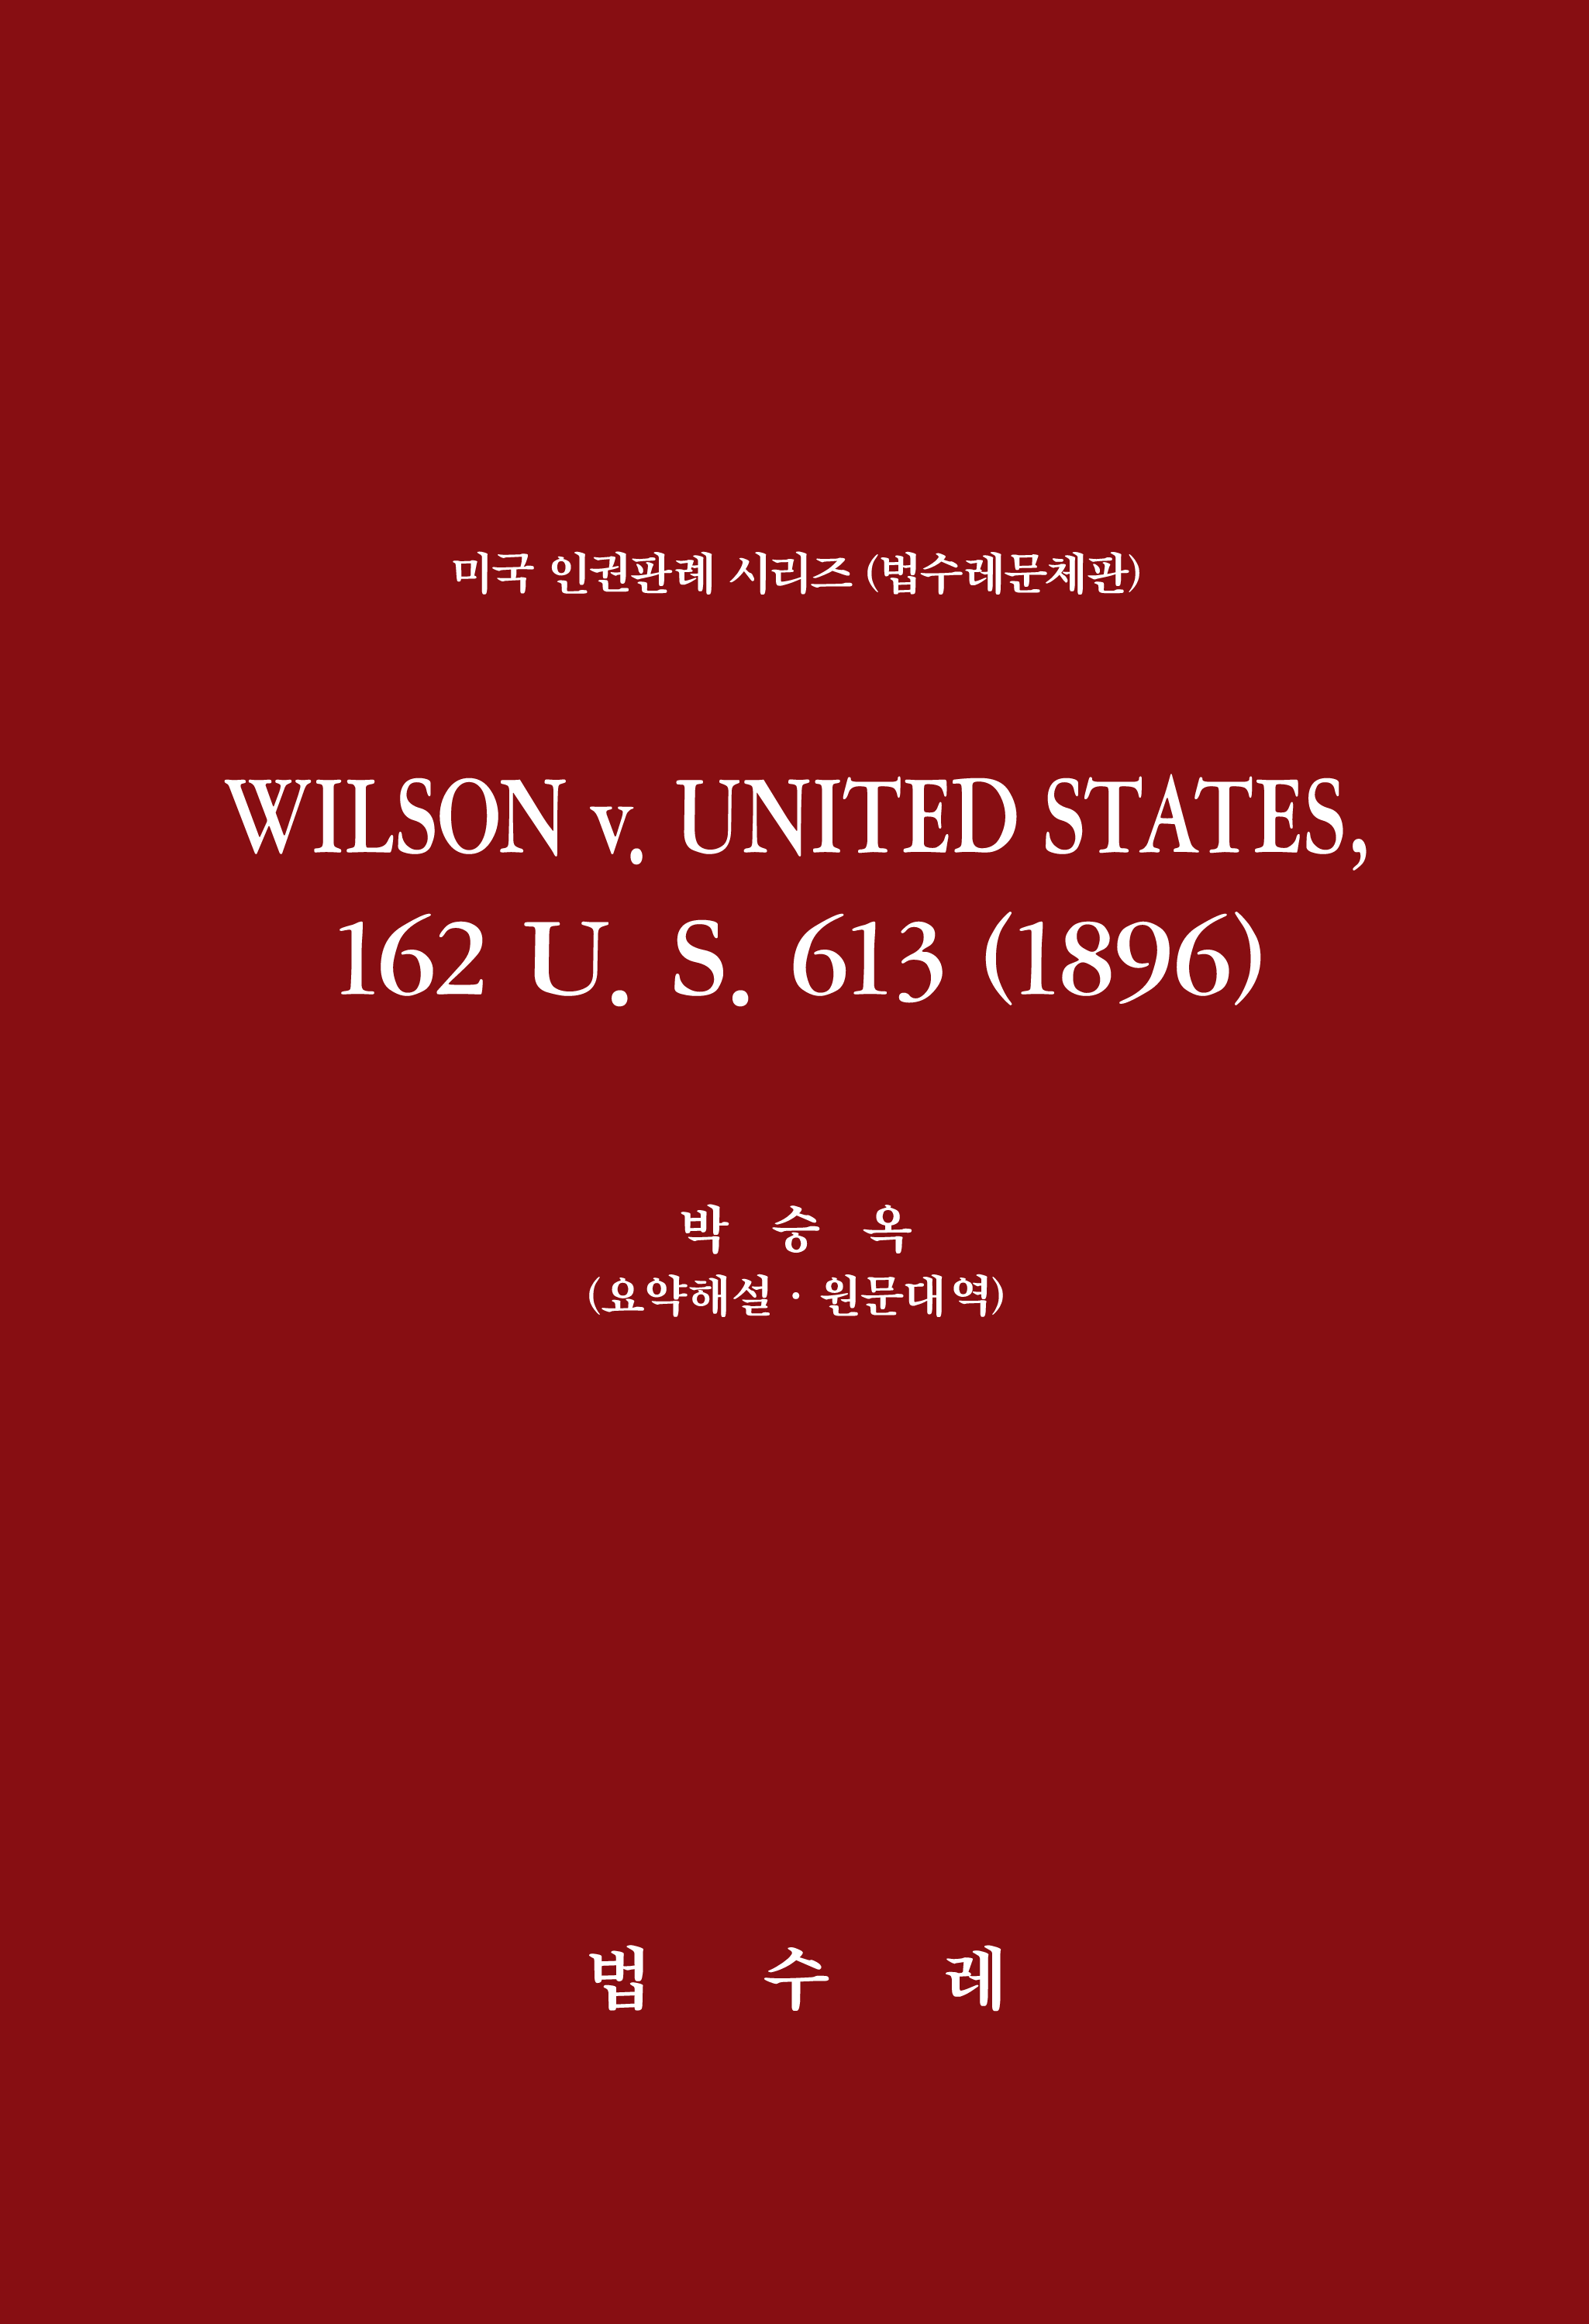 WILSON v. UNITED STATES, 162 U. S. 613 (1896)